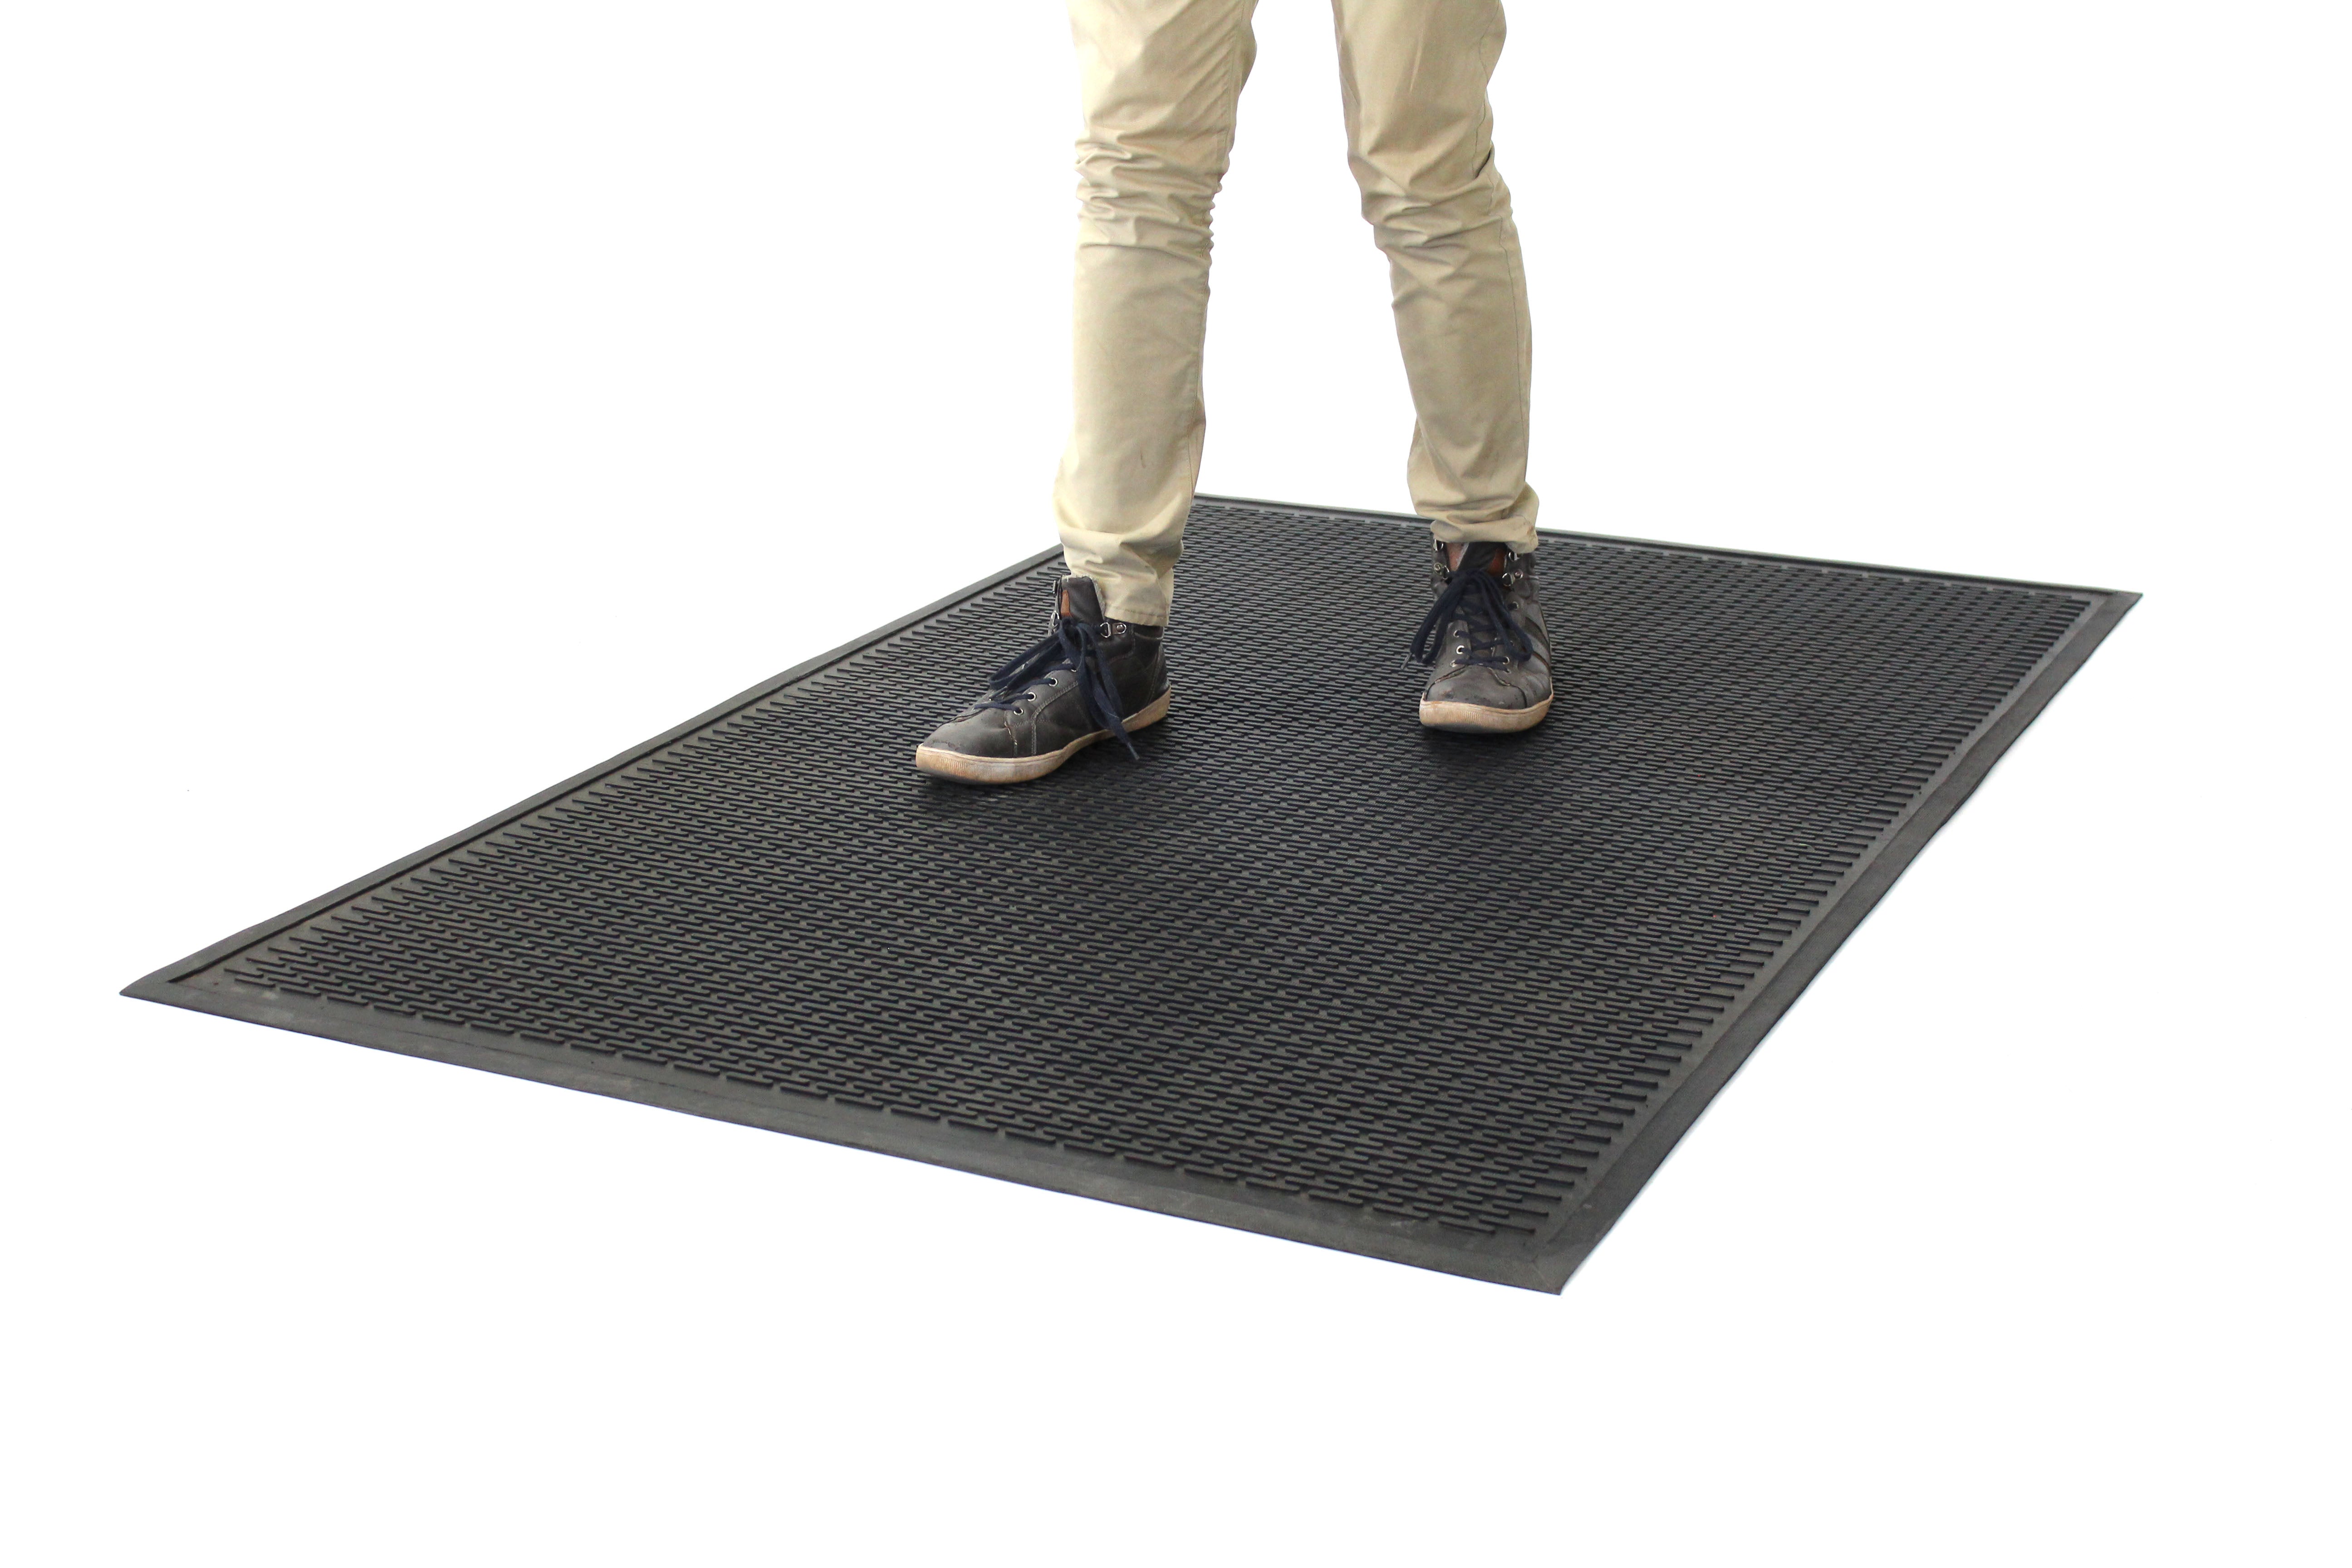 Heavy Duty rubber mats – Pro Auto Rubber